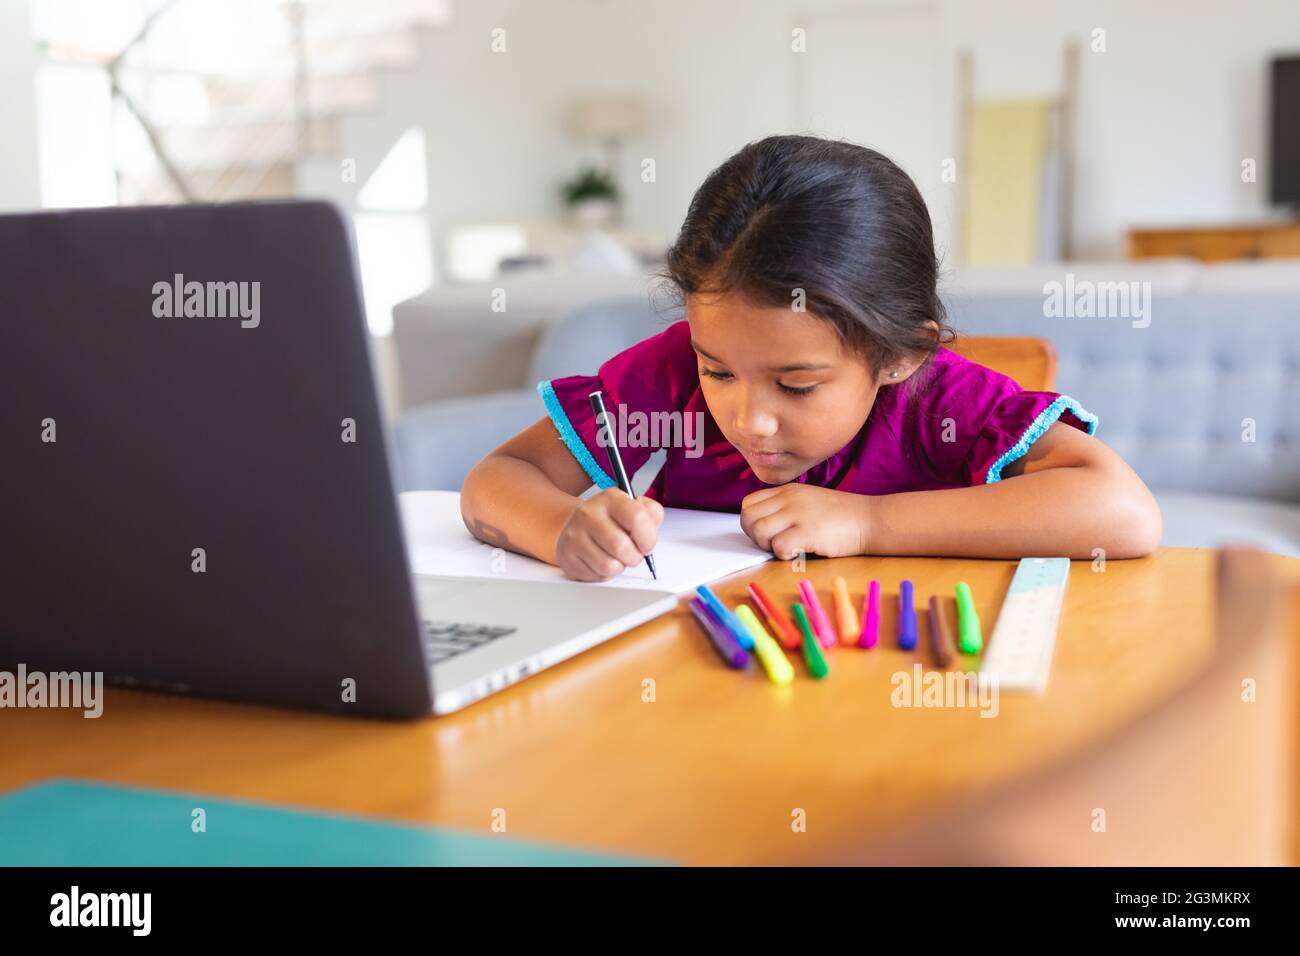 Happy hispanic girl sitting at kitchen table doing school work using laptop Stock Photo